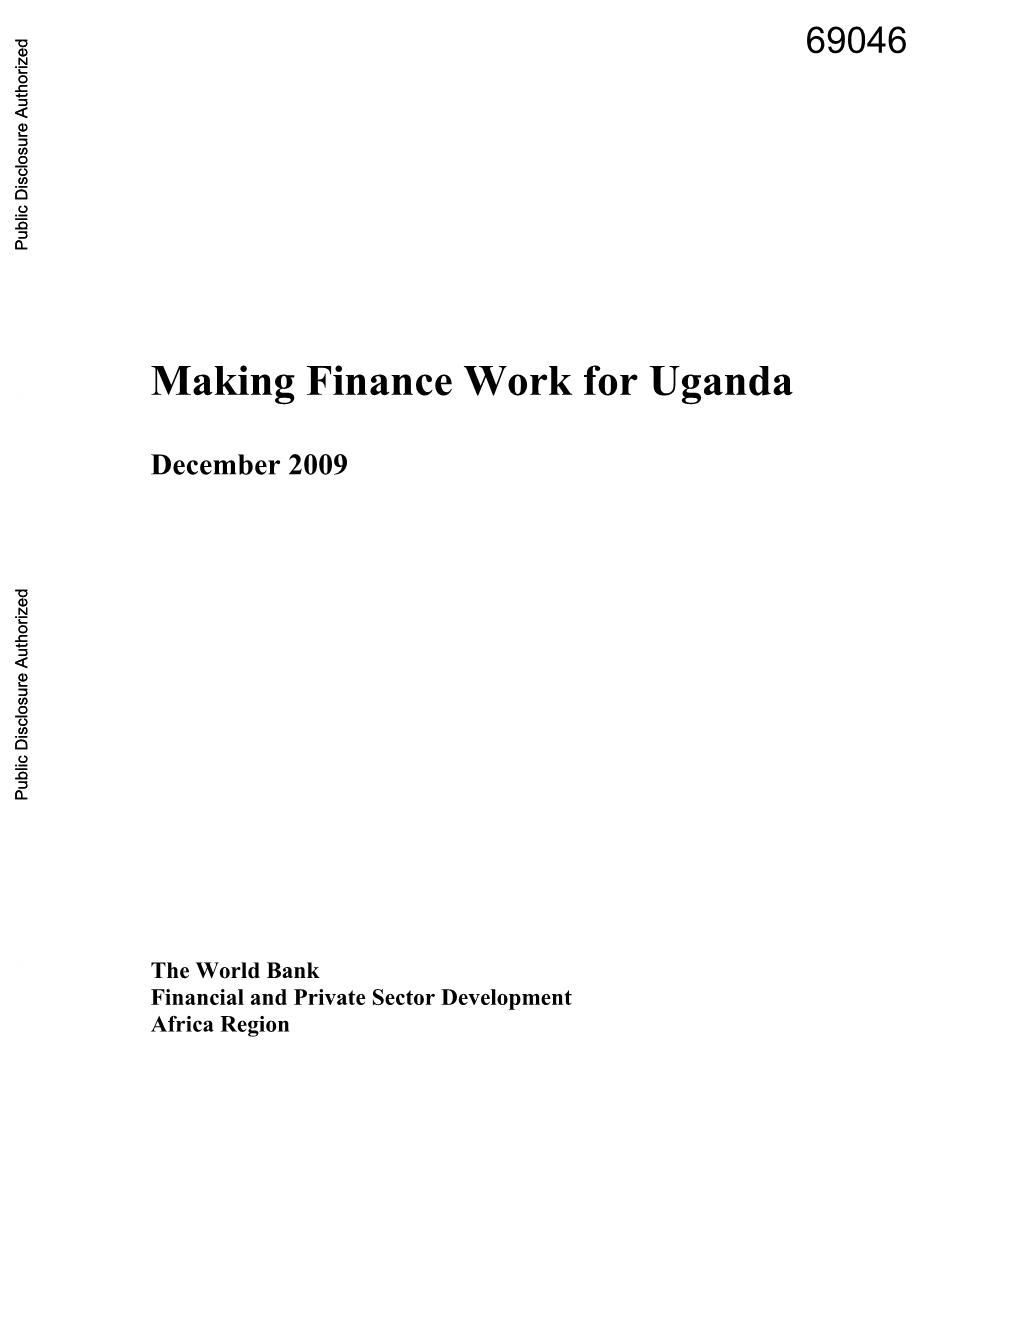 Overview of Ugandan Housing Finance